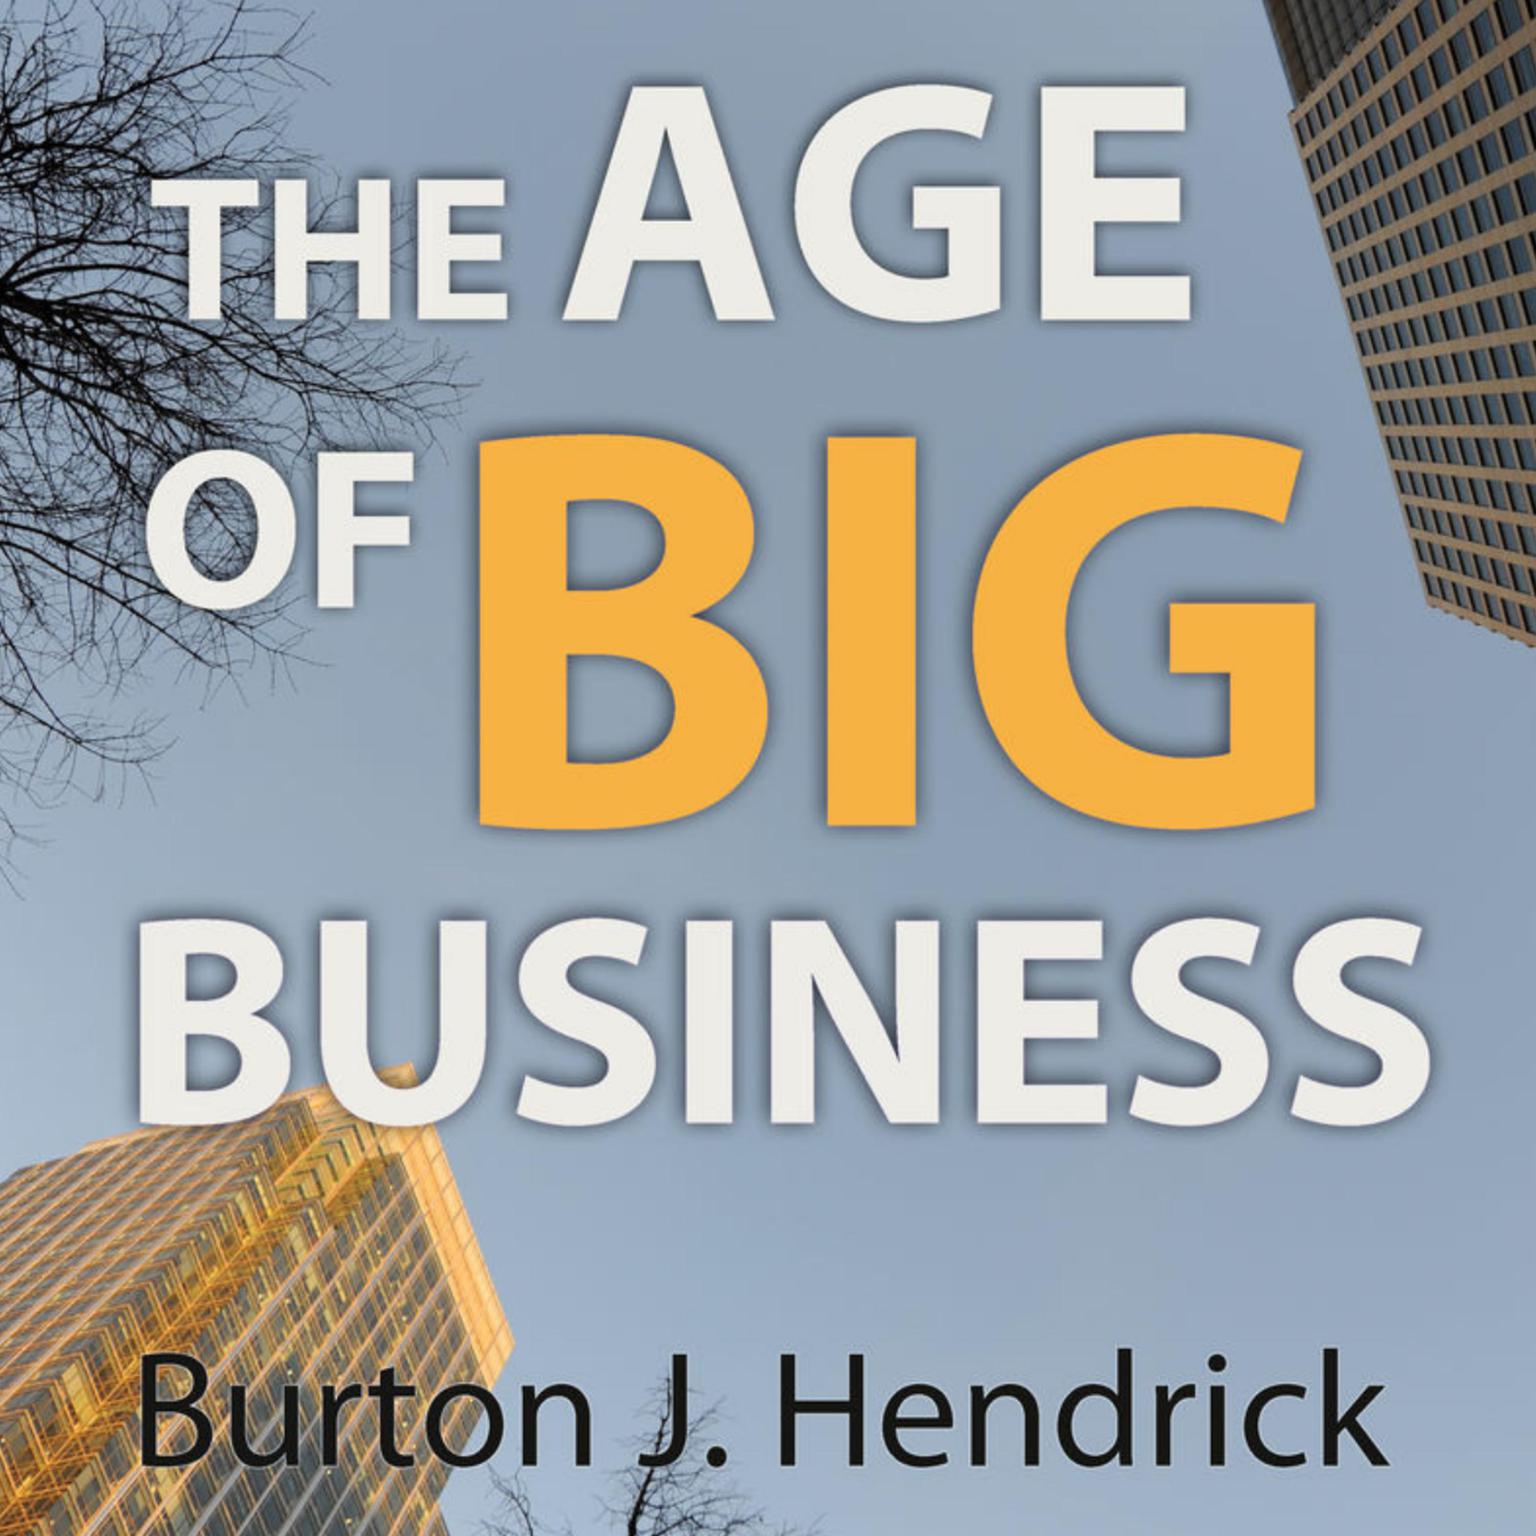 The Age of Big Business Audiobook, by Burton Jesse Hendrick